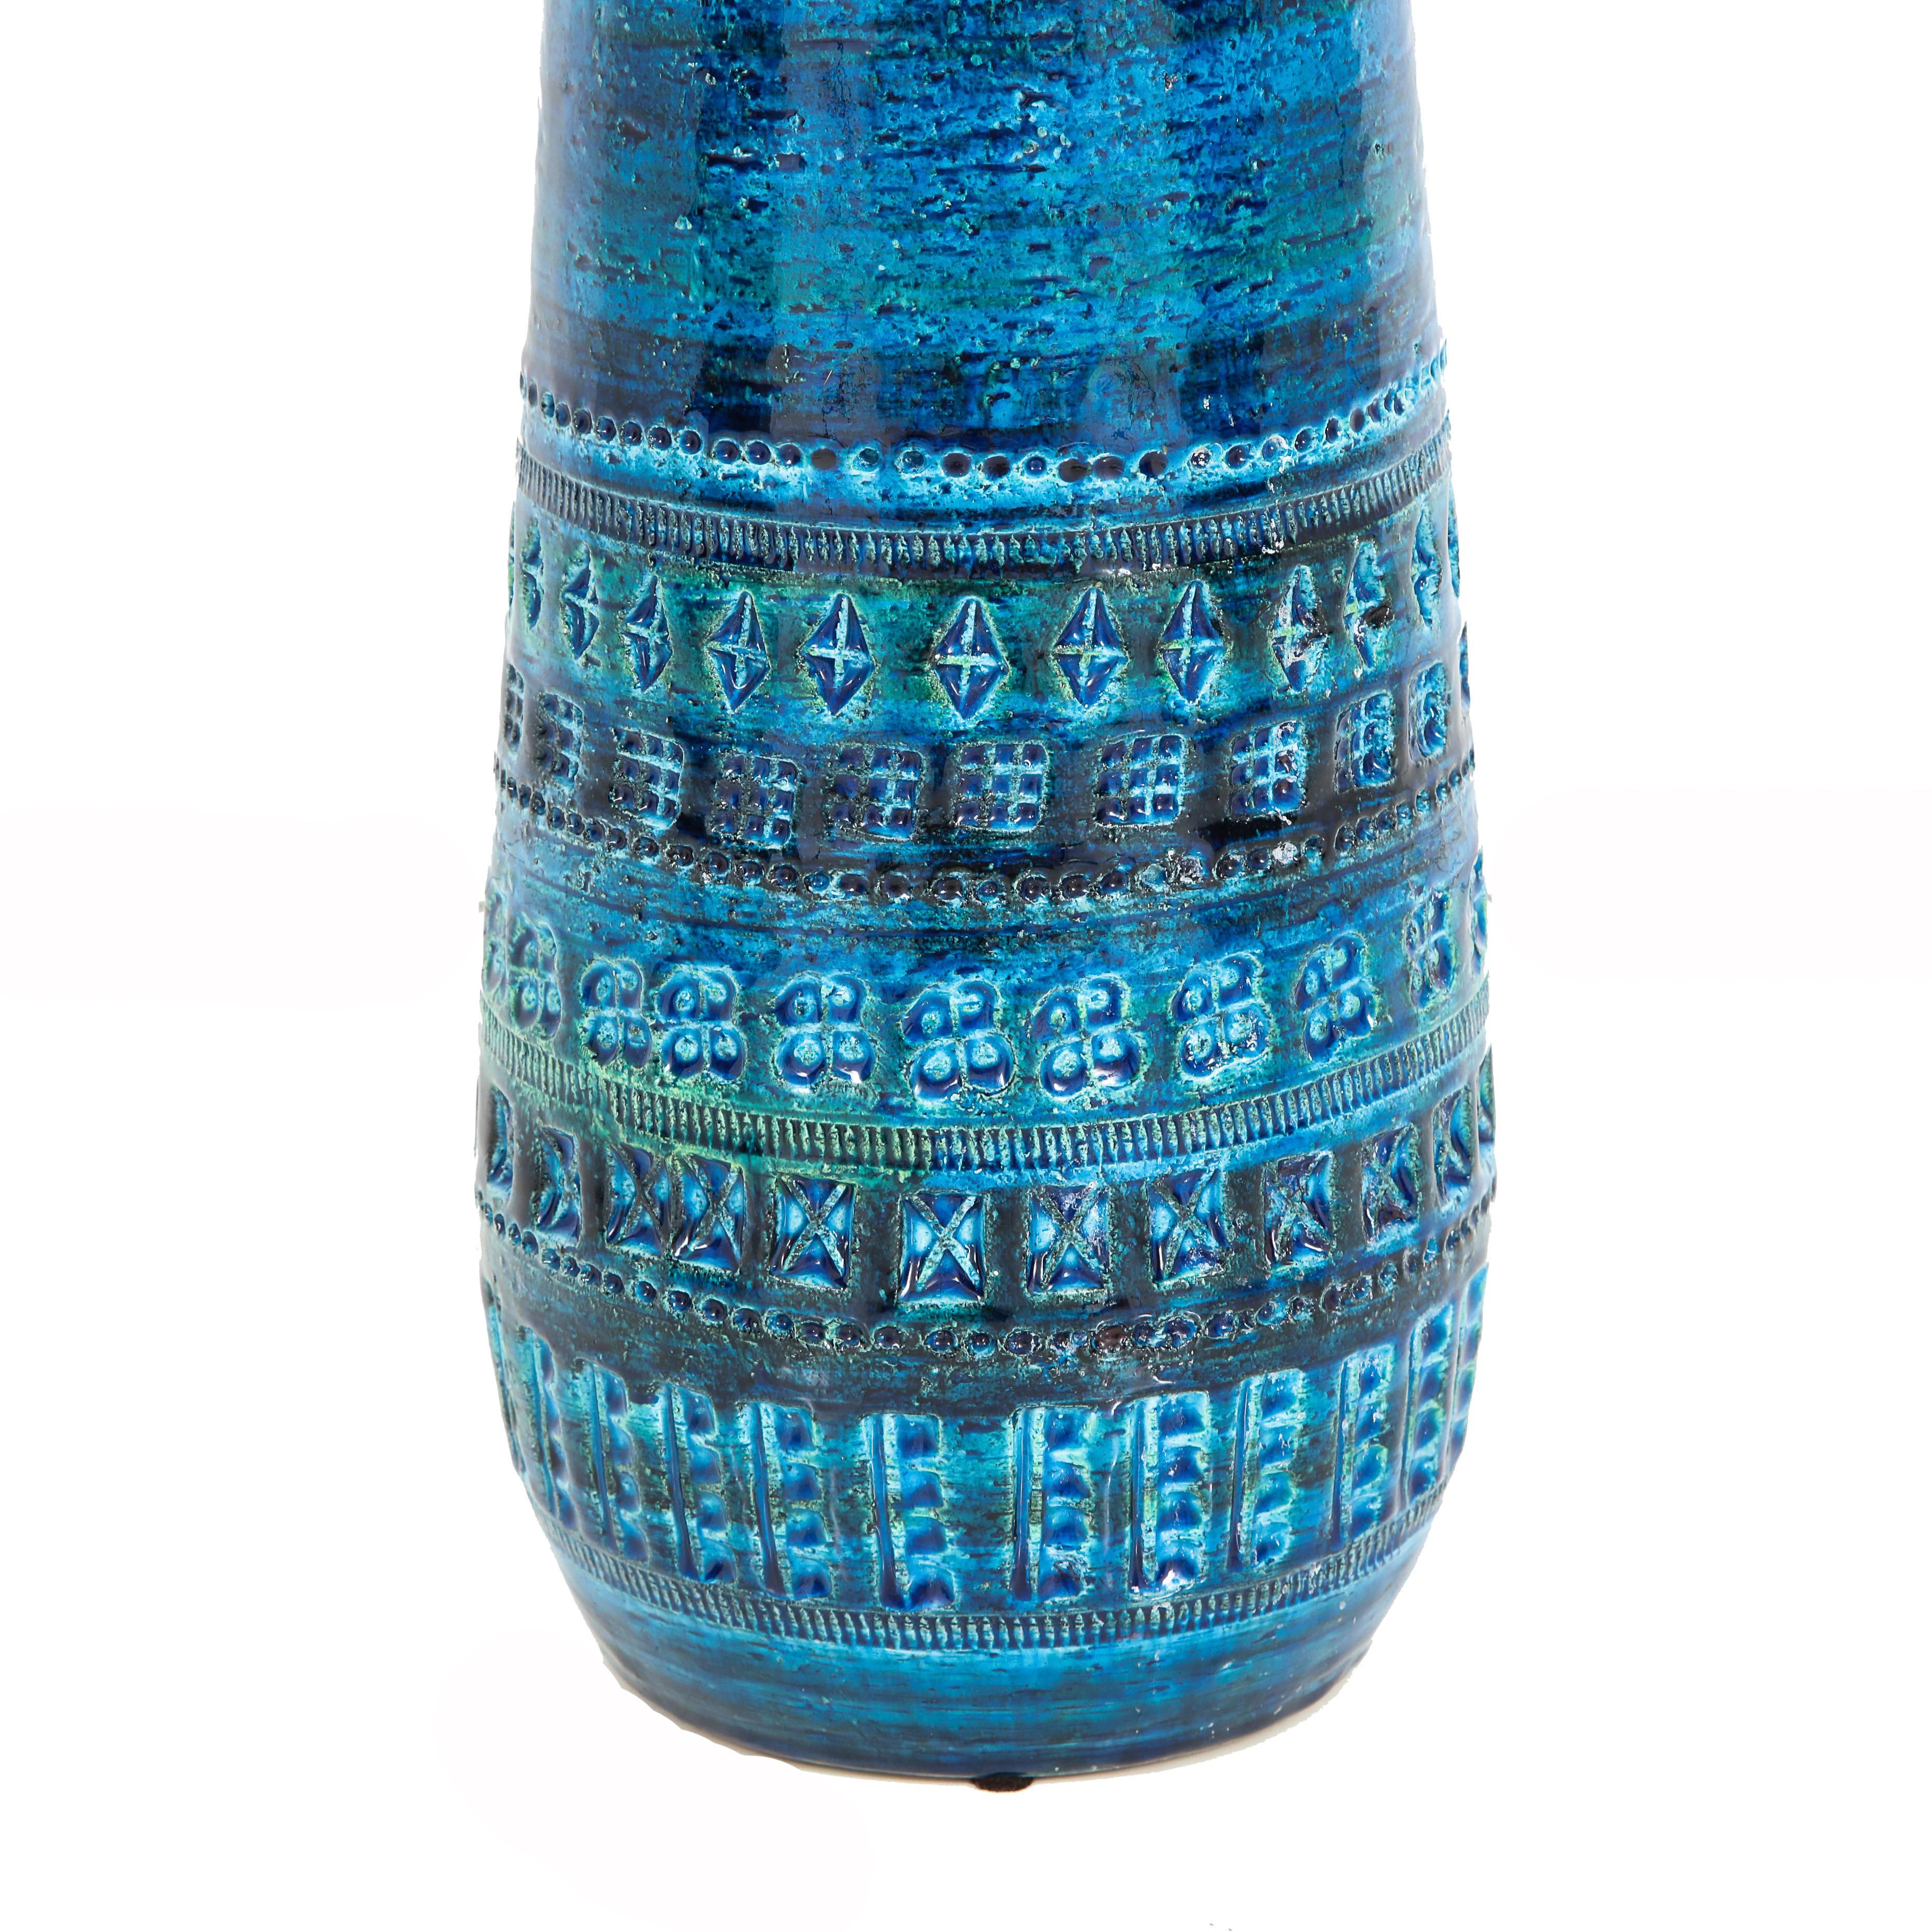 Aldo Londi Bitossi Ceramic Vase Rimini Blue Signed, Italy, 1960s 1